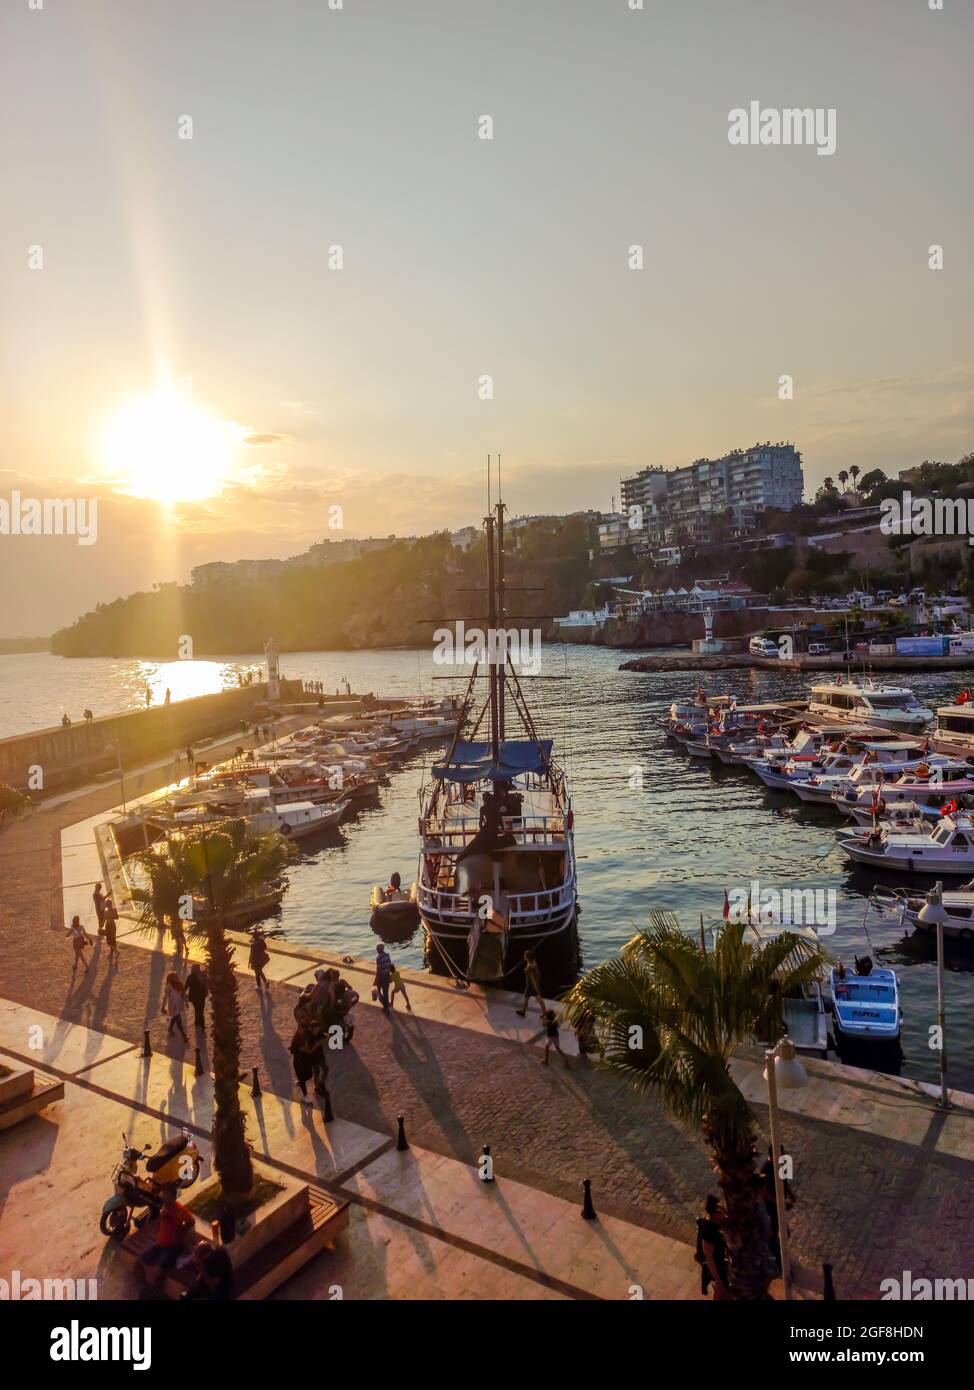 Antalya, Turkey - August 22, 2021: Boats docked at sunset in Kaleici, Antalya. Stock Photo